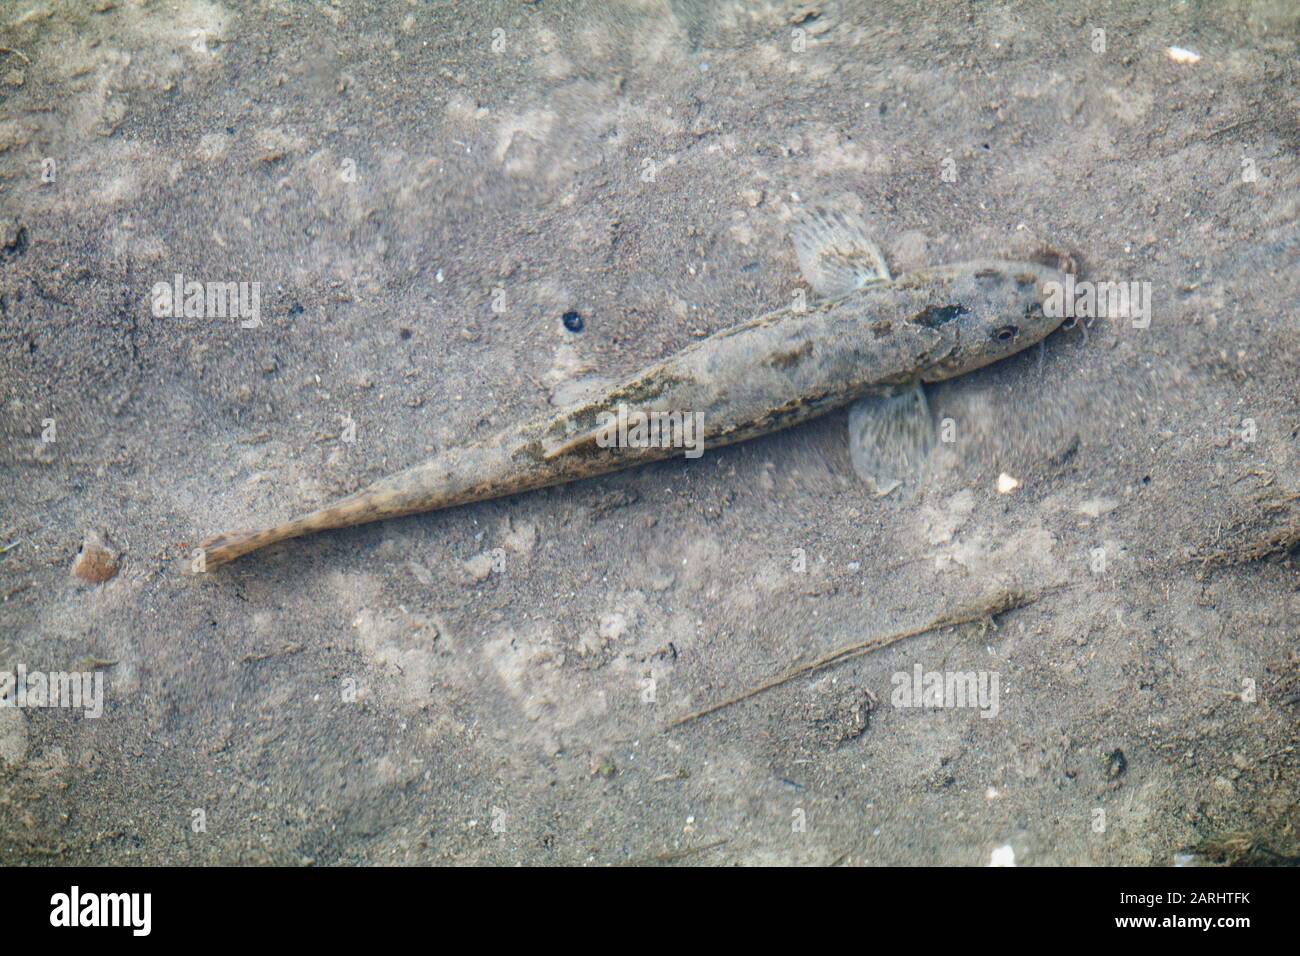 Barbatula barbatula, Stone Loach, a European species of fresh water ray-finned fish, family Nemacheilidae Stock Photo